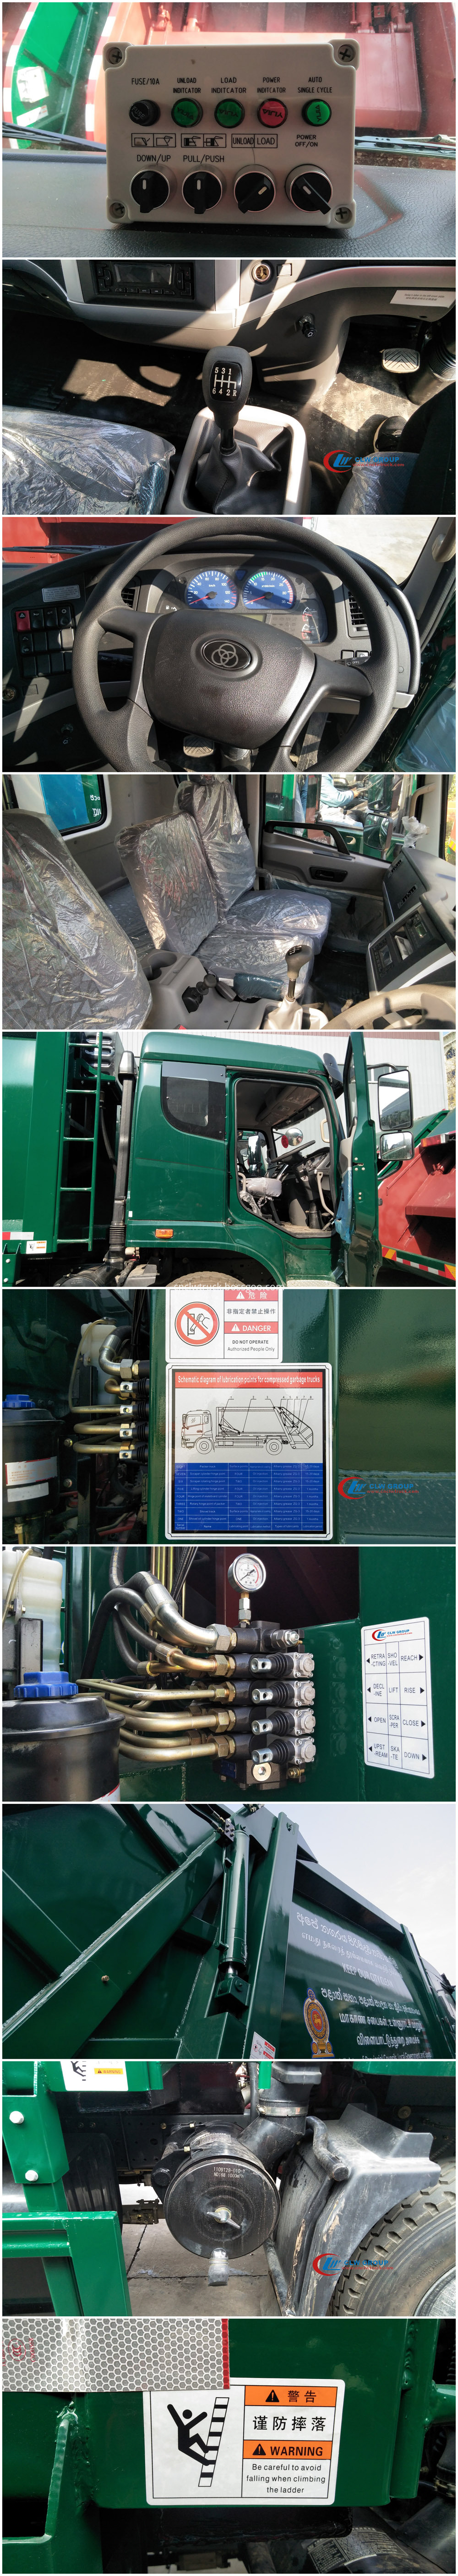 waste compactor truck details